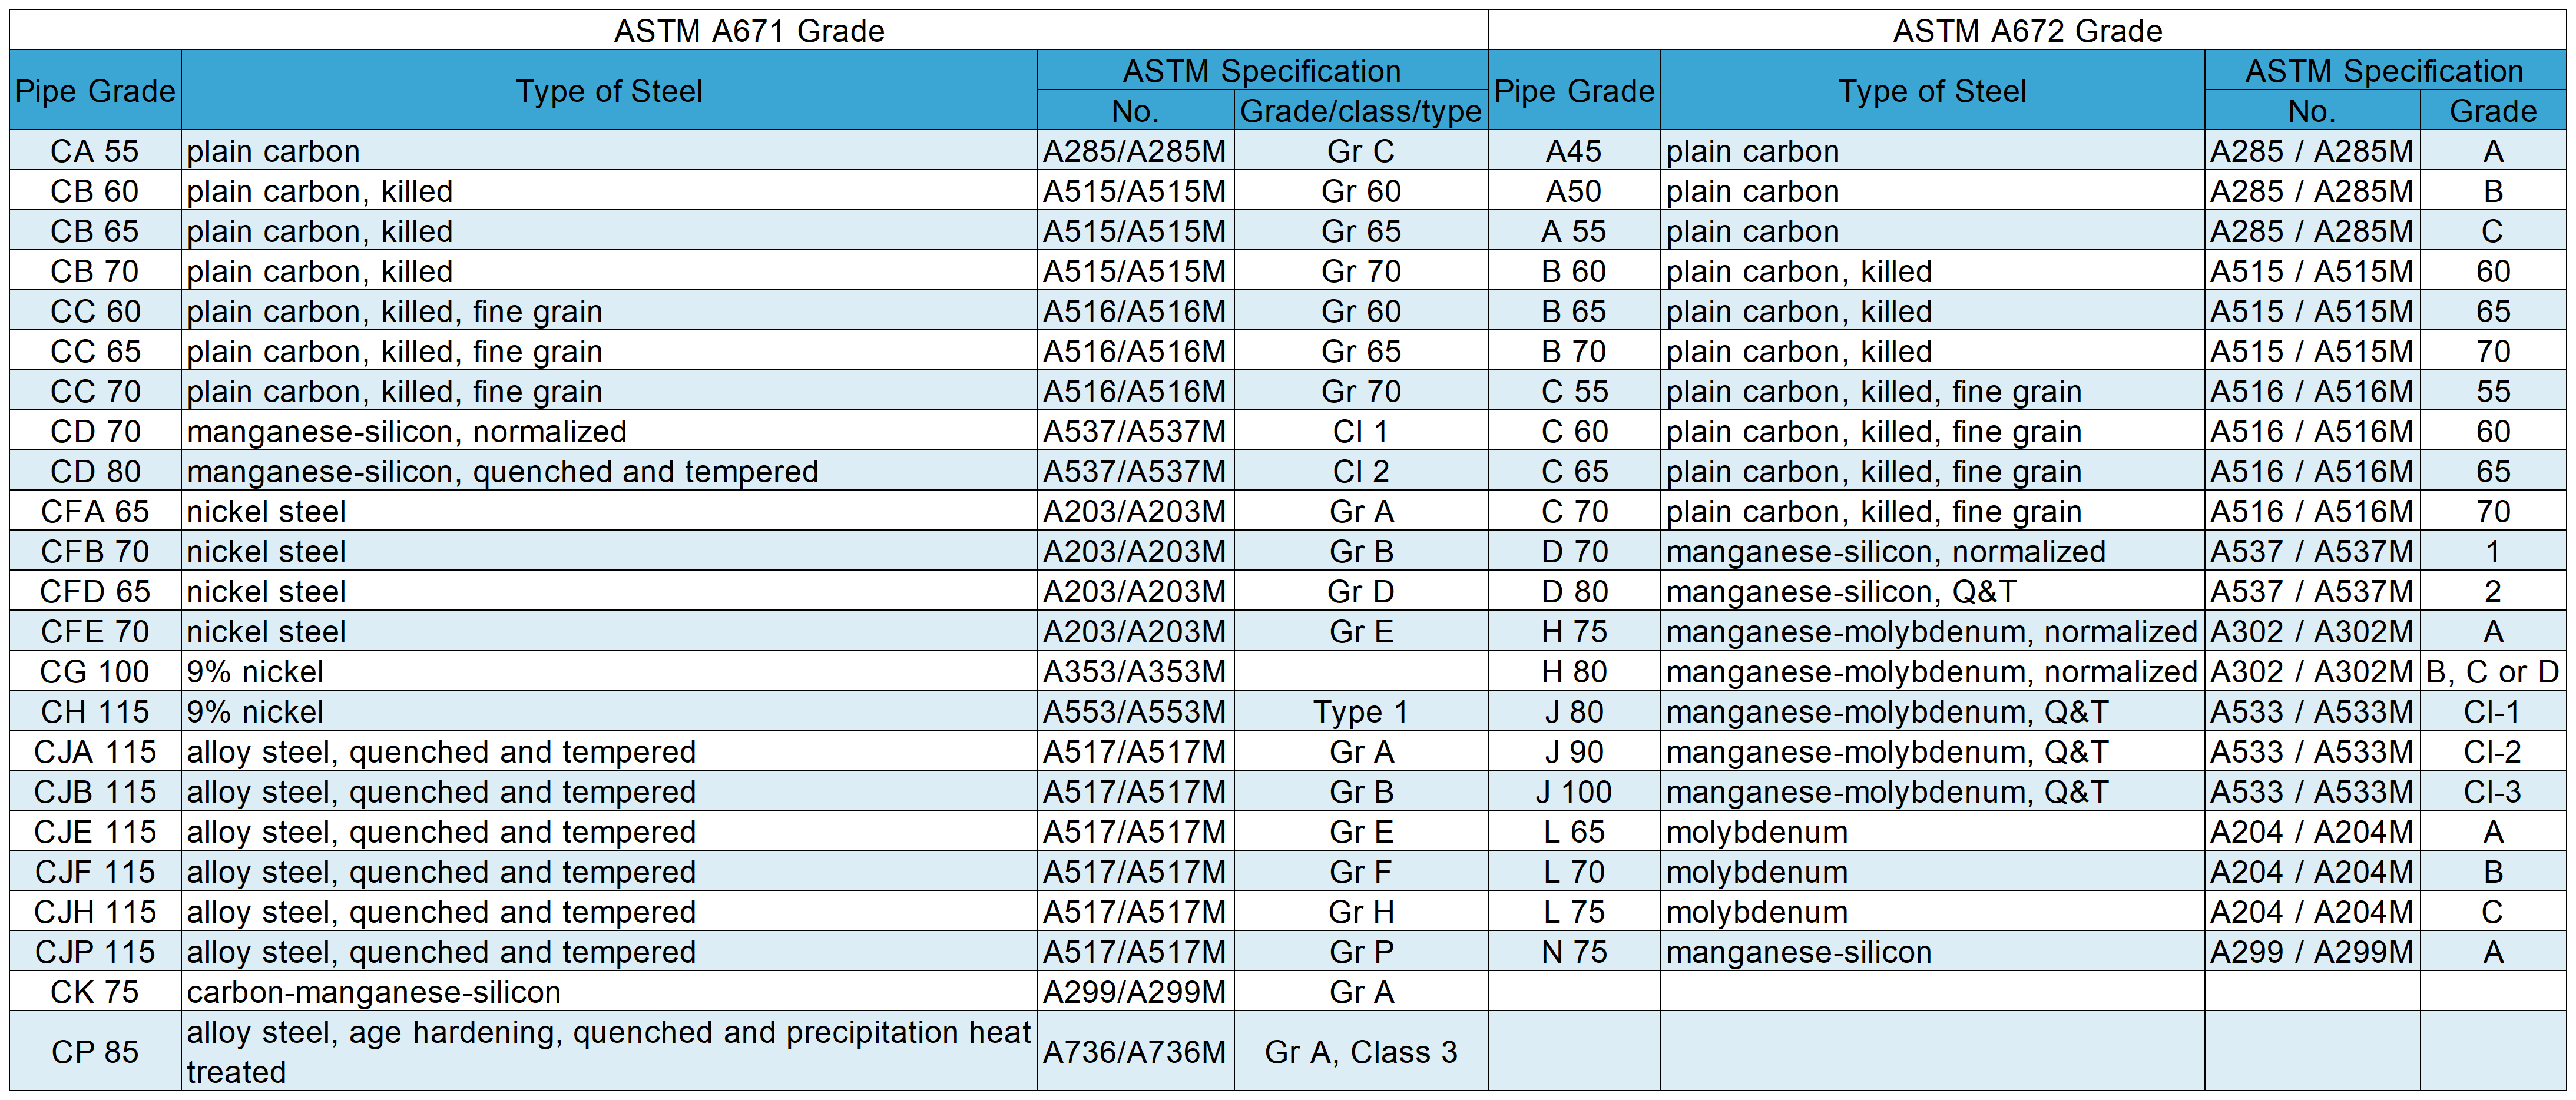 astm a671 est différent de a672 : grade